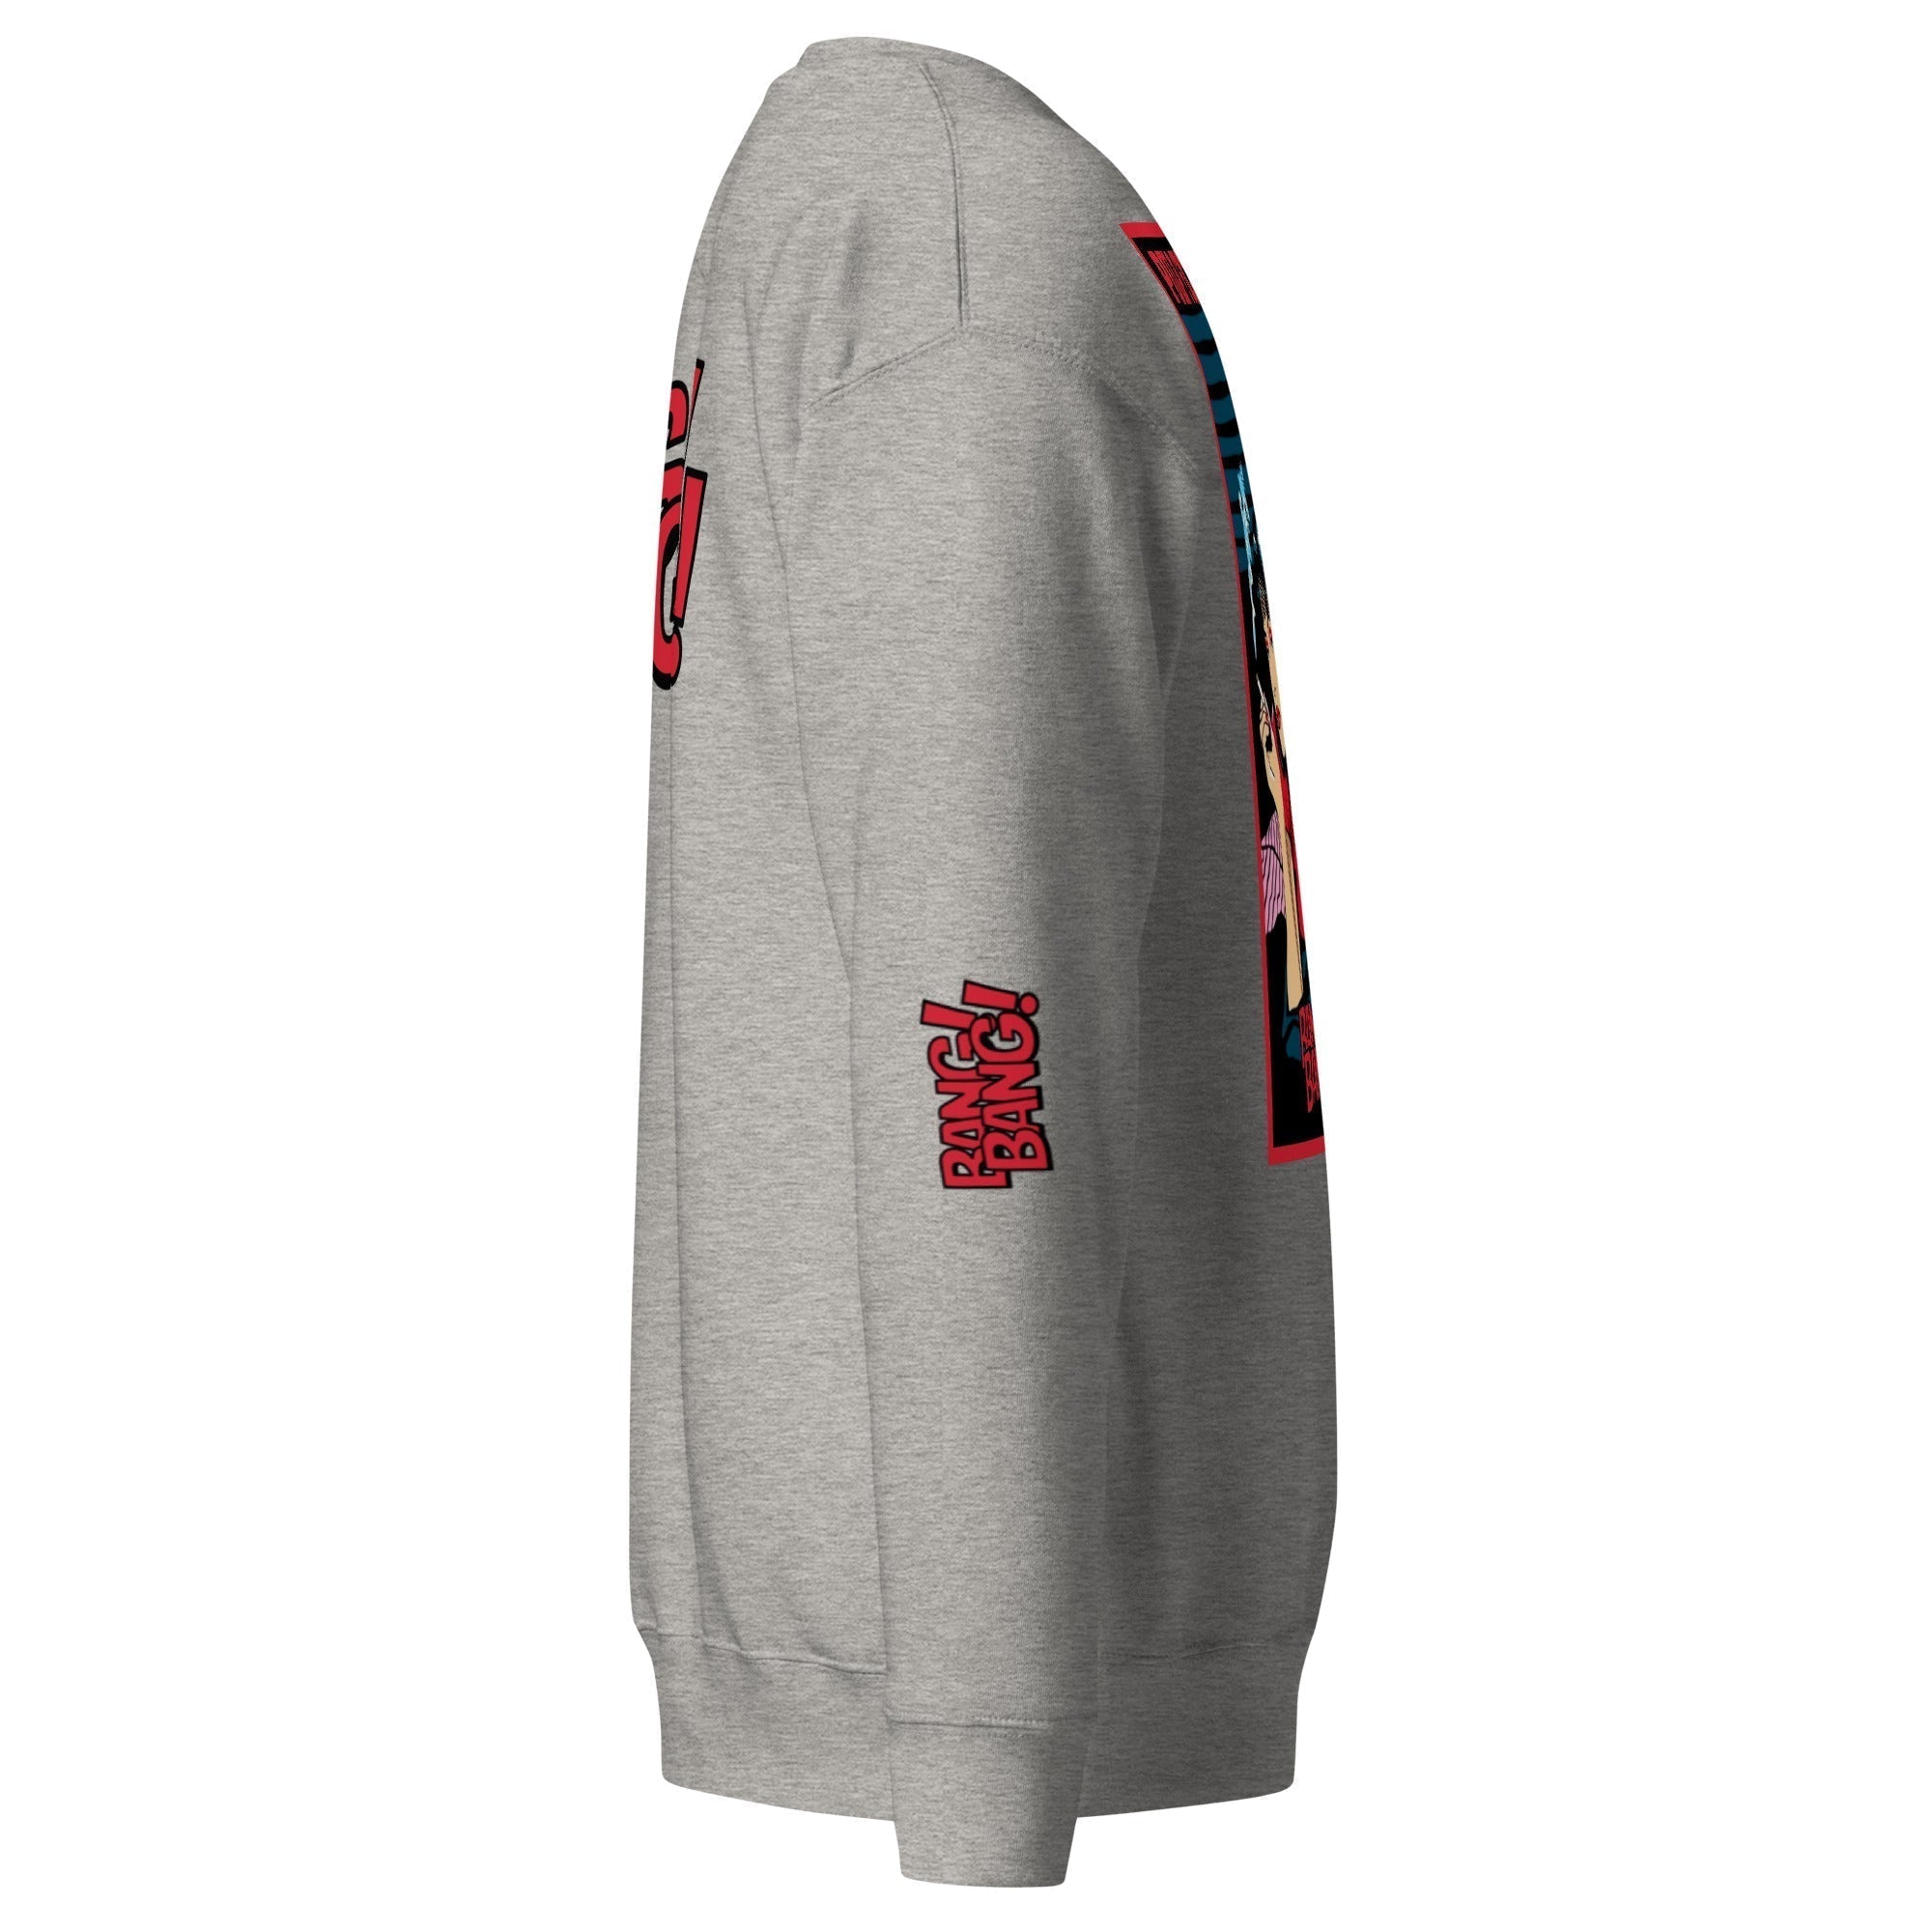 Unisex Premium Sweatshirt - Pulp Fiction Bang! Bang! - GRAPHIC T-SHIRTS